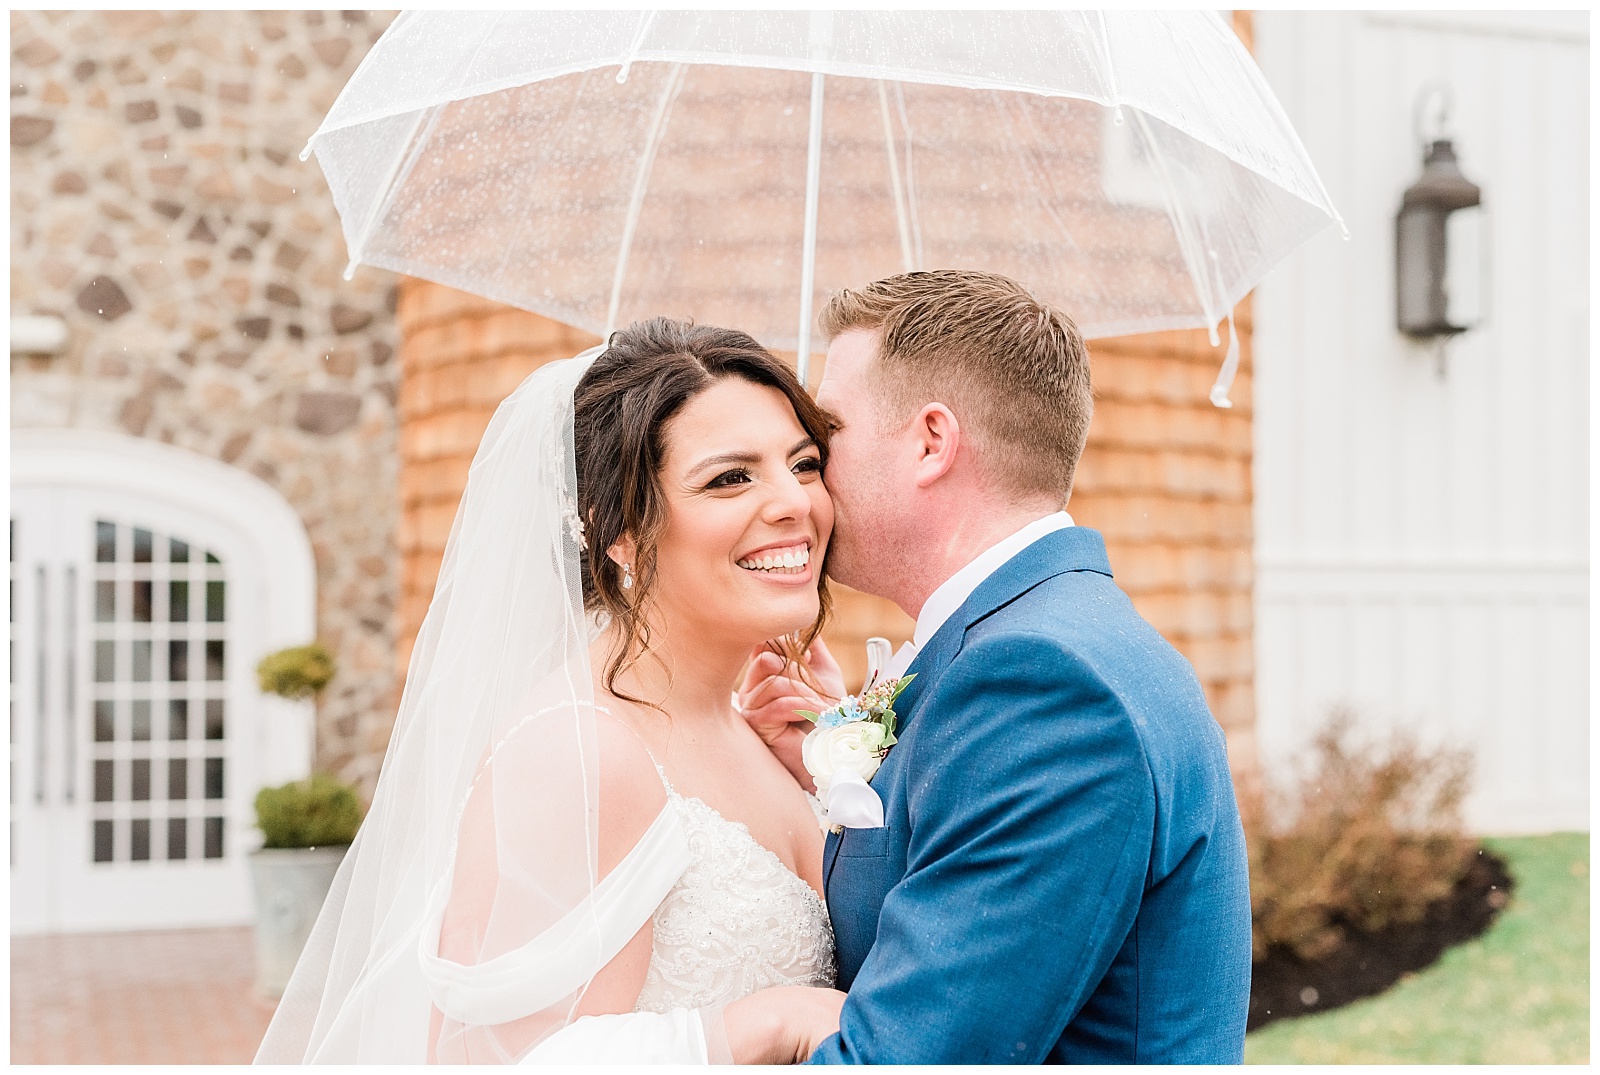 Groom kisses the bride's cheek under a clear umbrella in the rain at the Ryland Inn.